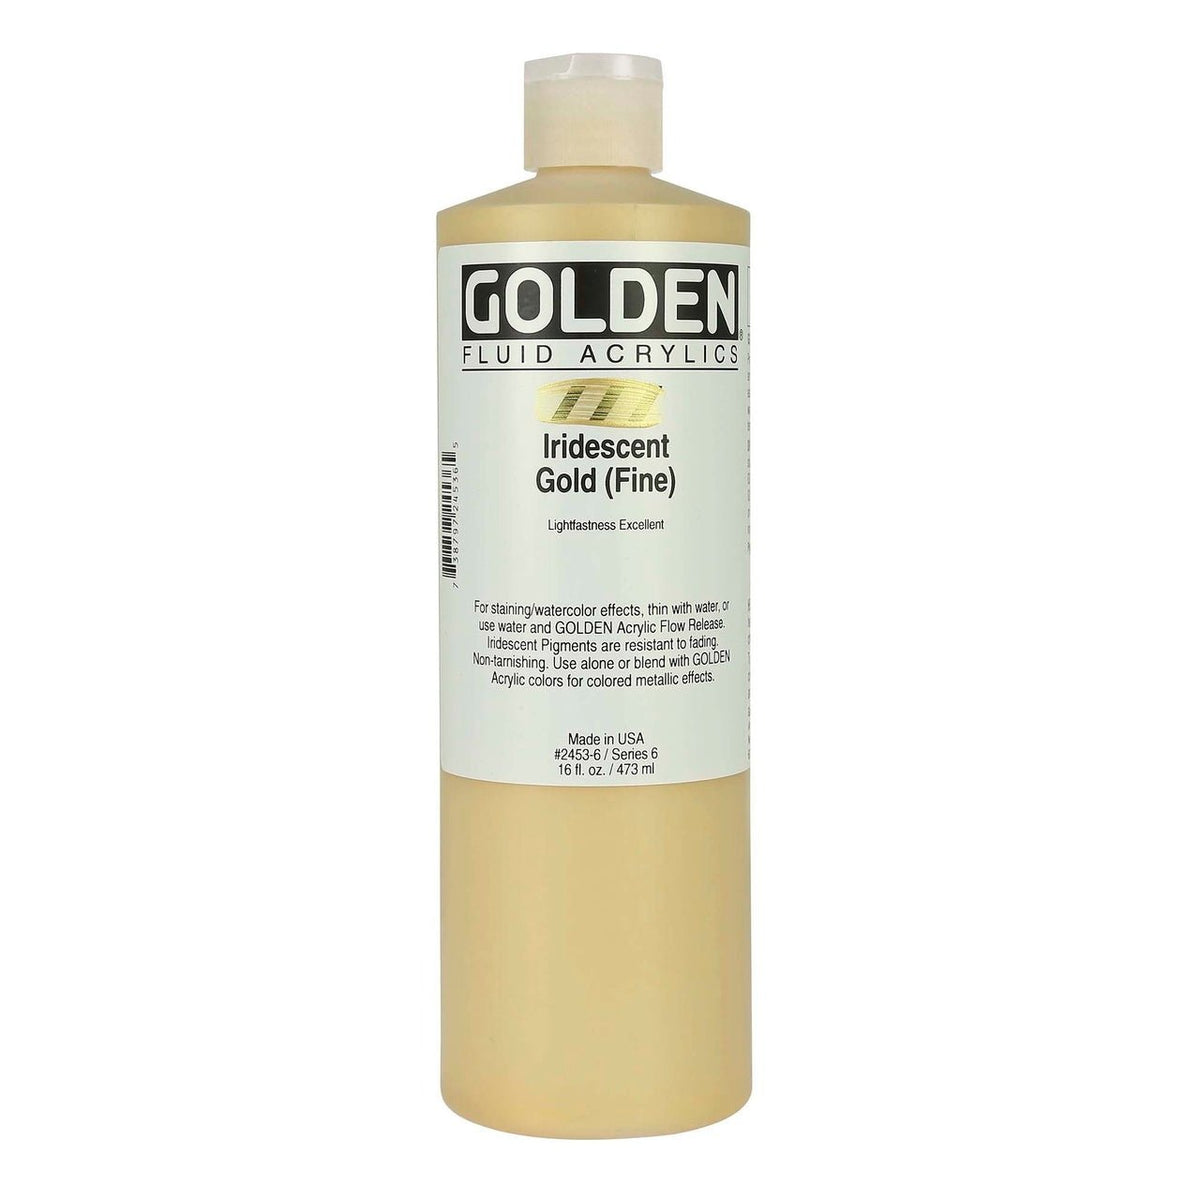 Golden Fluid Acrylic Iridescent Gold (fine) 16 oz - merriartist.com